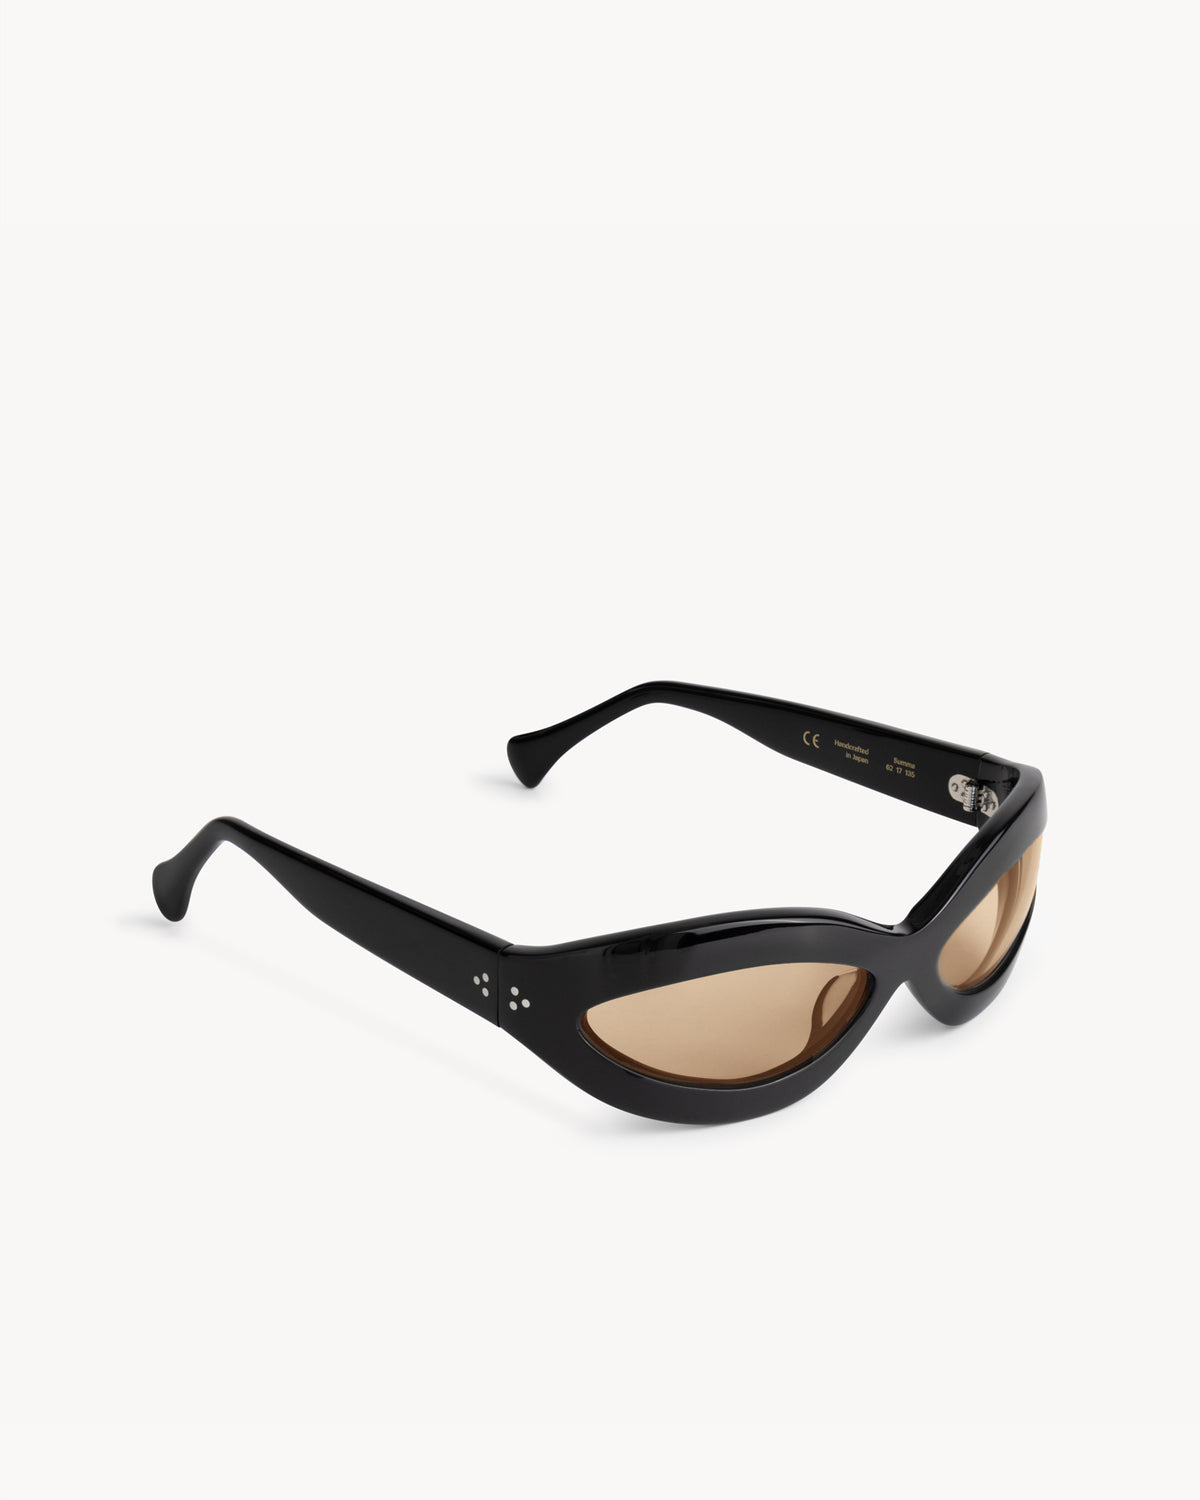 Port Tanger Summa Sunglasses in Black Acetate and Amber Lenses 2